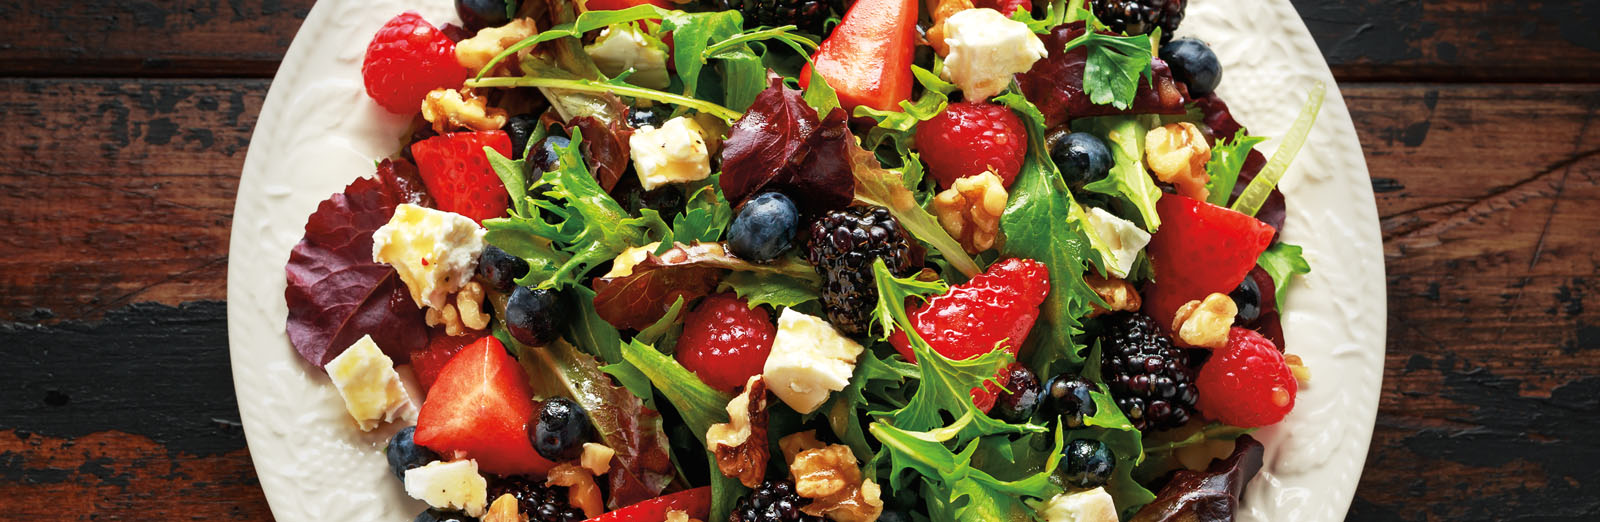 berry-salad-1600x522.jpg